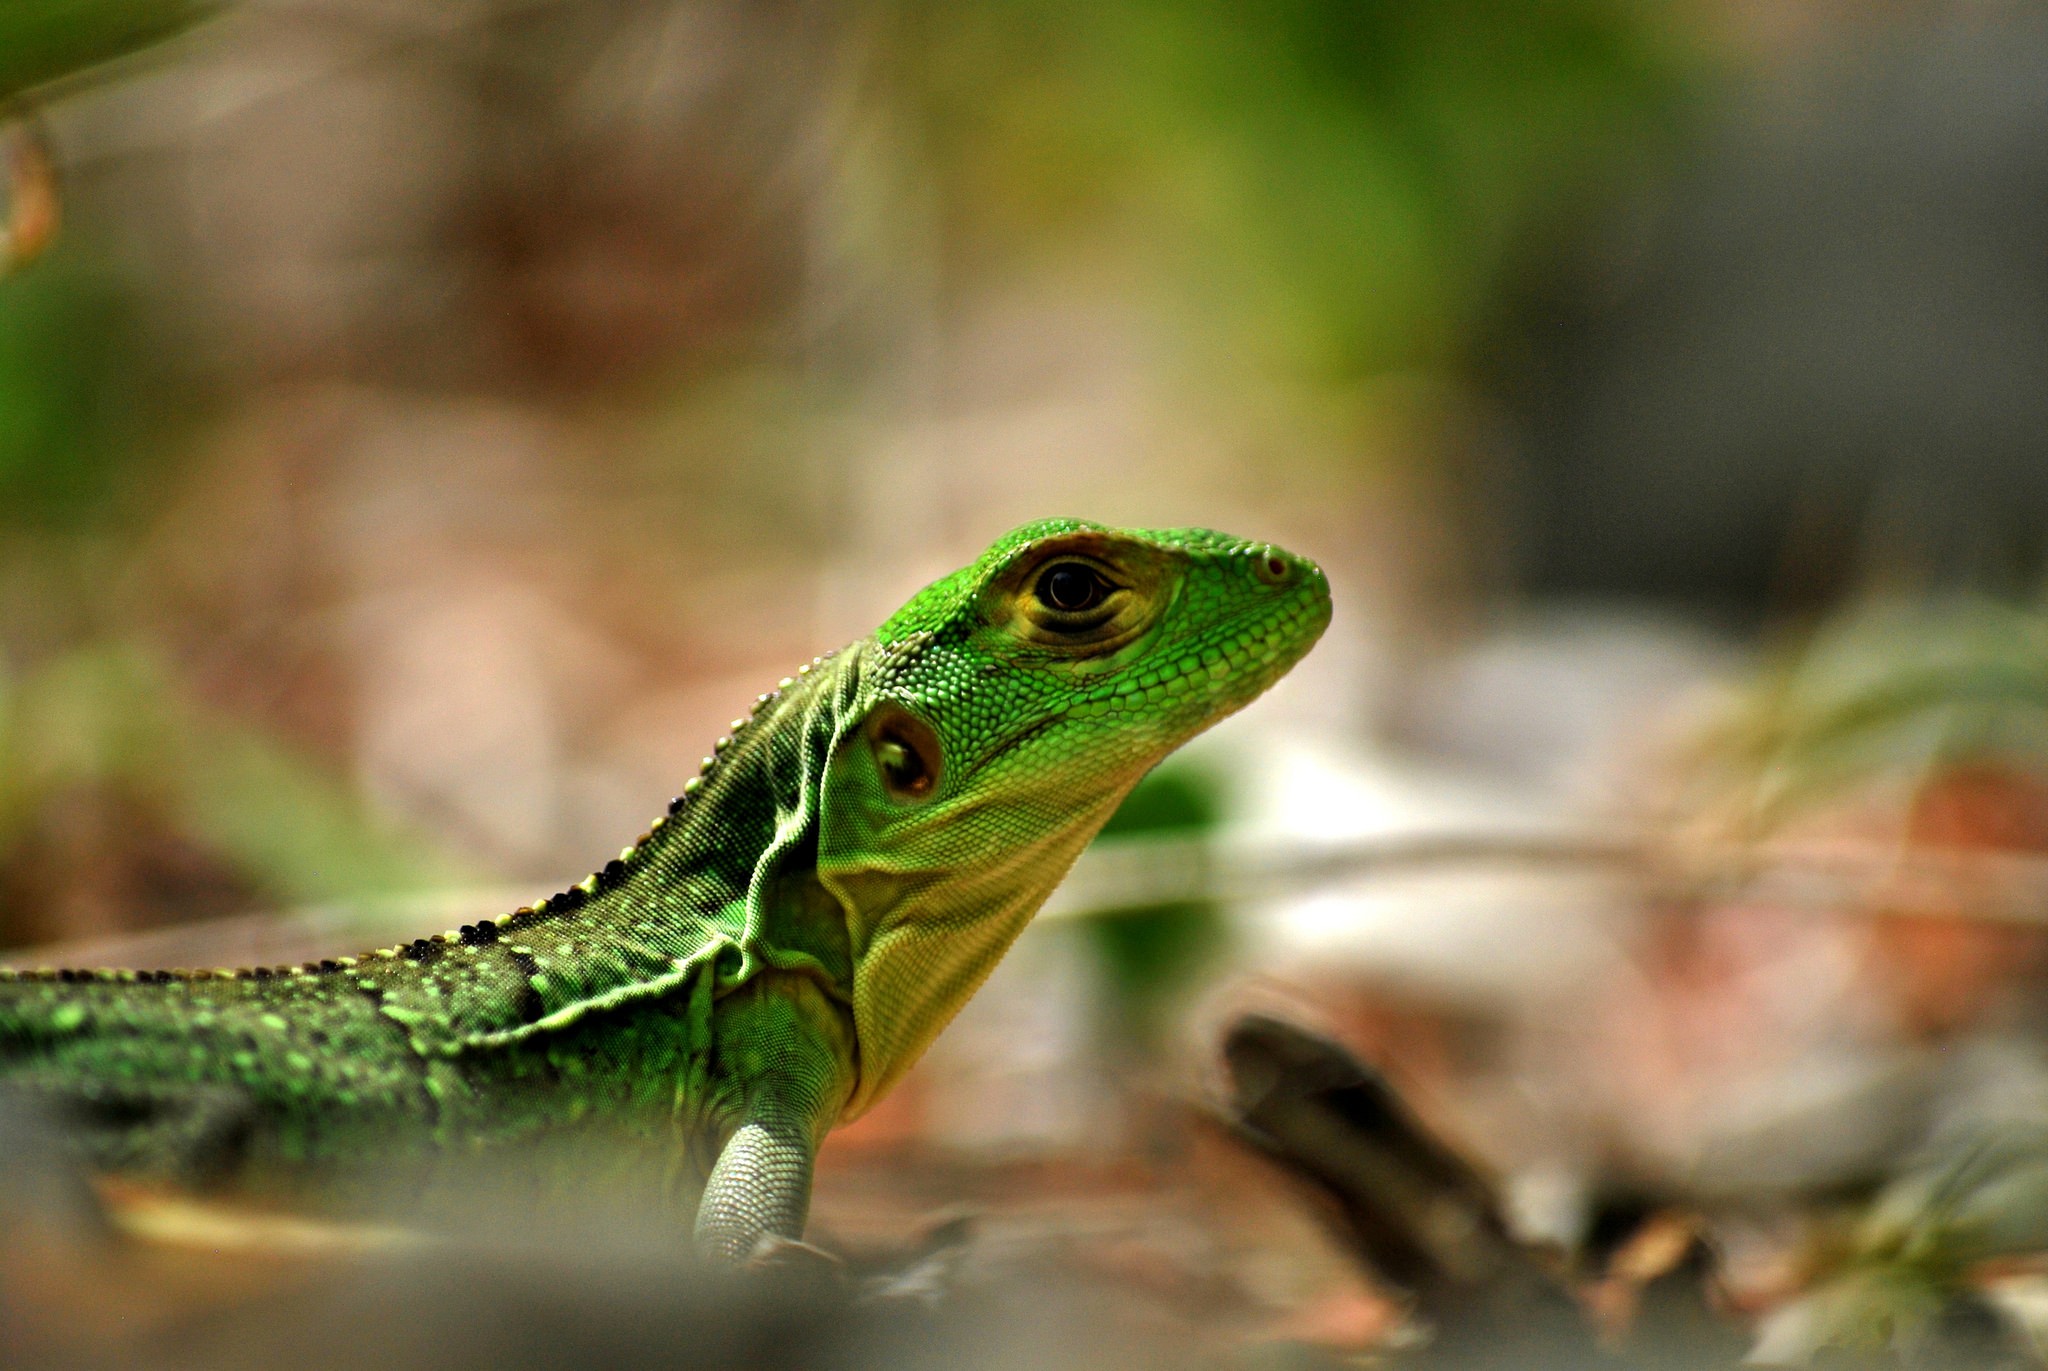 General 2048x1371 photography nature macro depth of field lizards bokeh leaves reptiles animals green skin